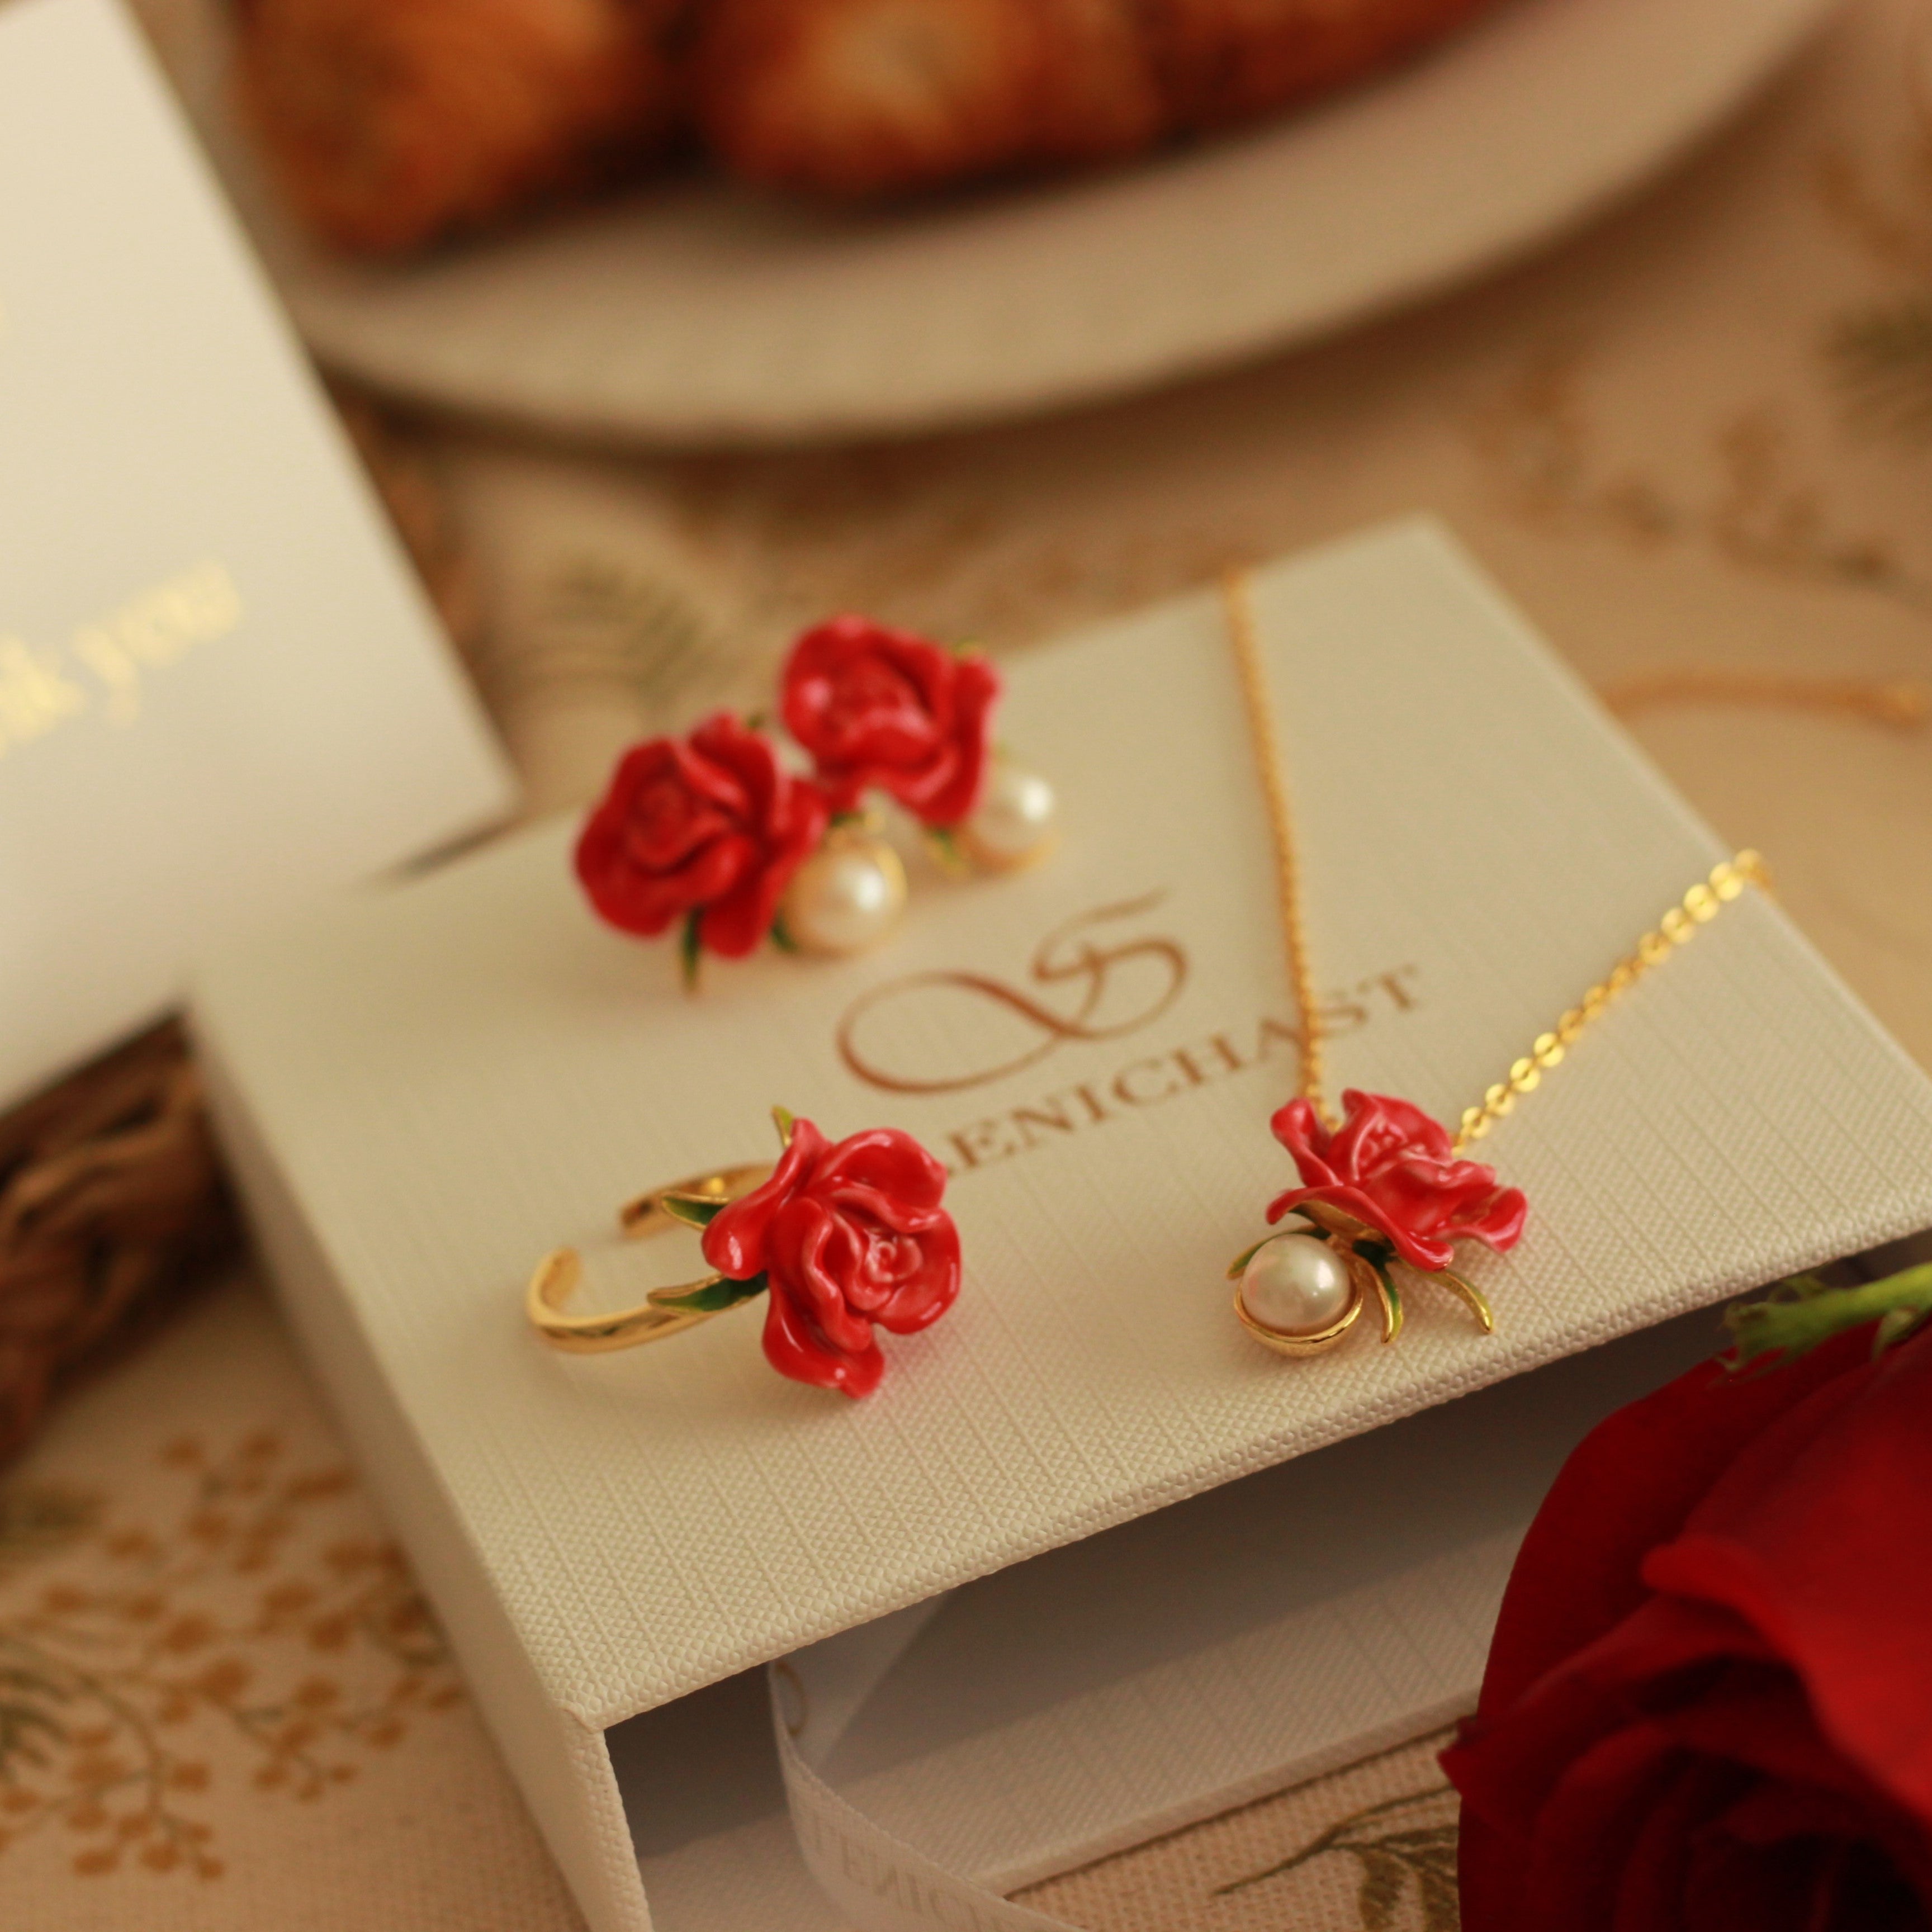 Rose Jewelry Set